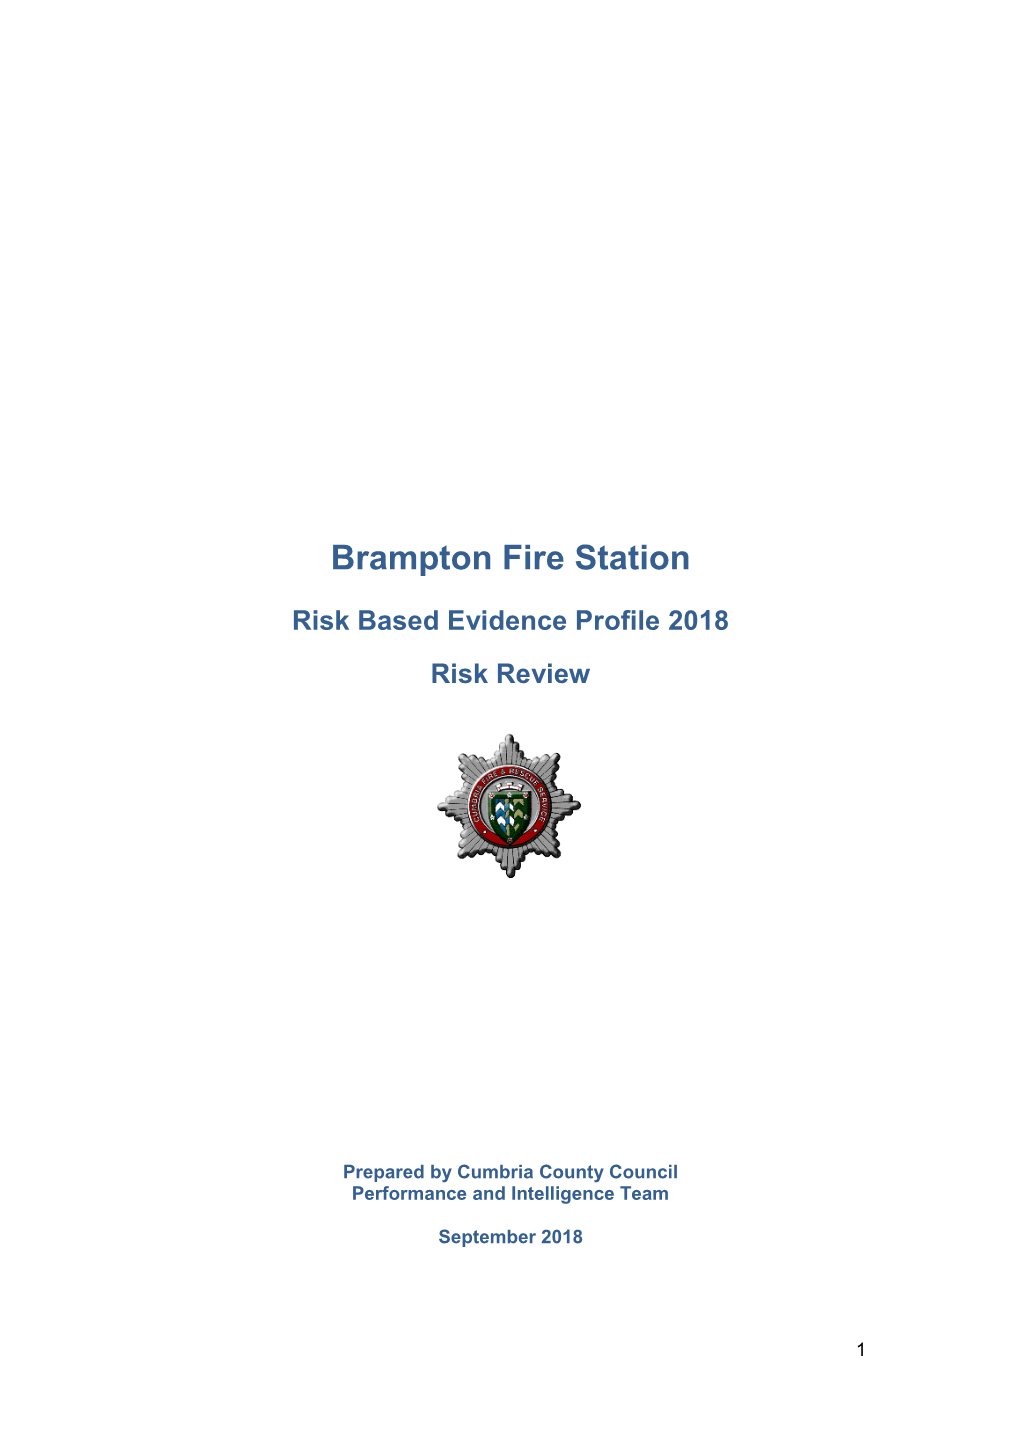 Brampton Fire Station Risk Profile